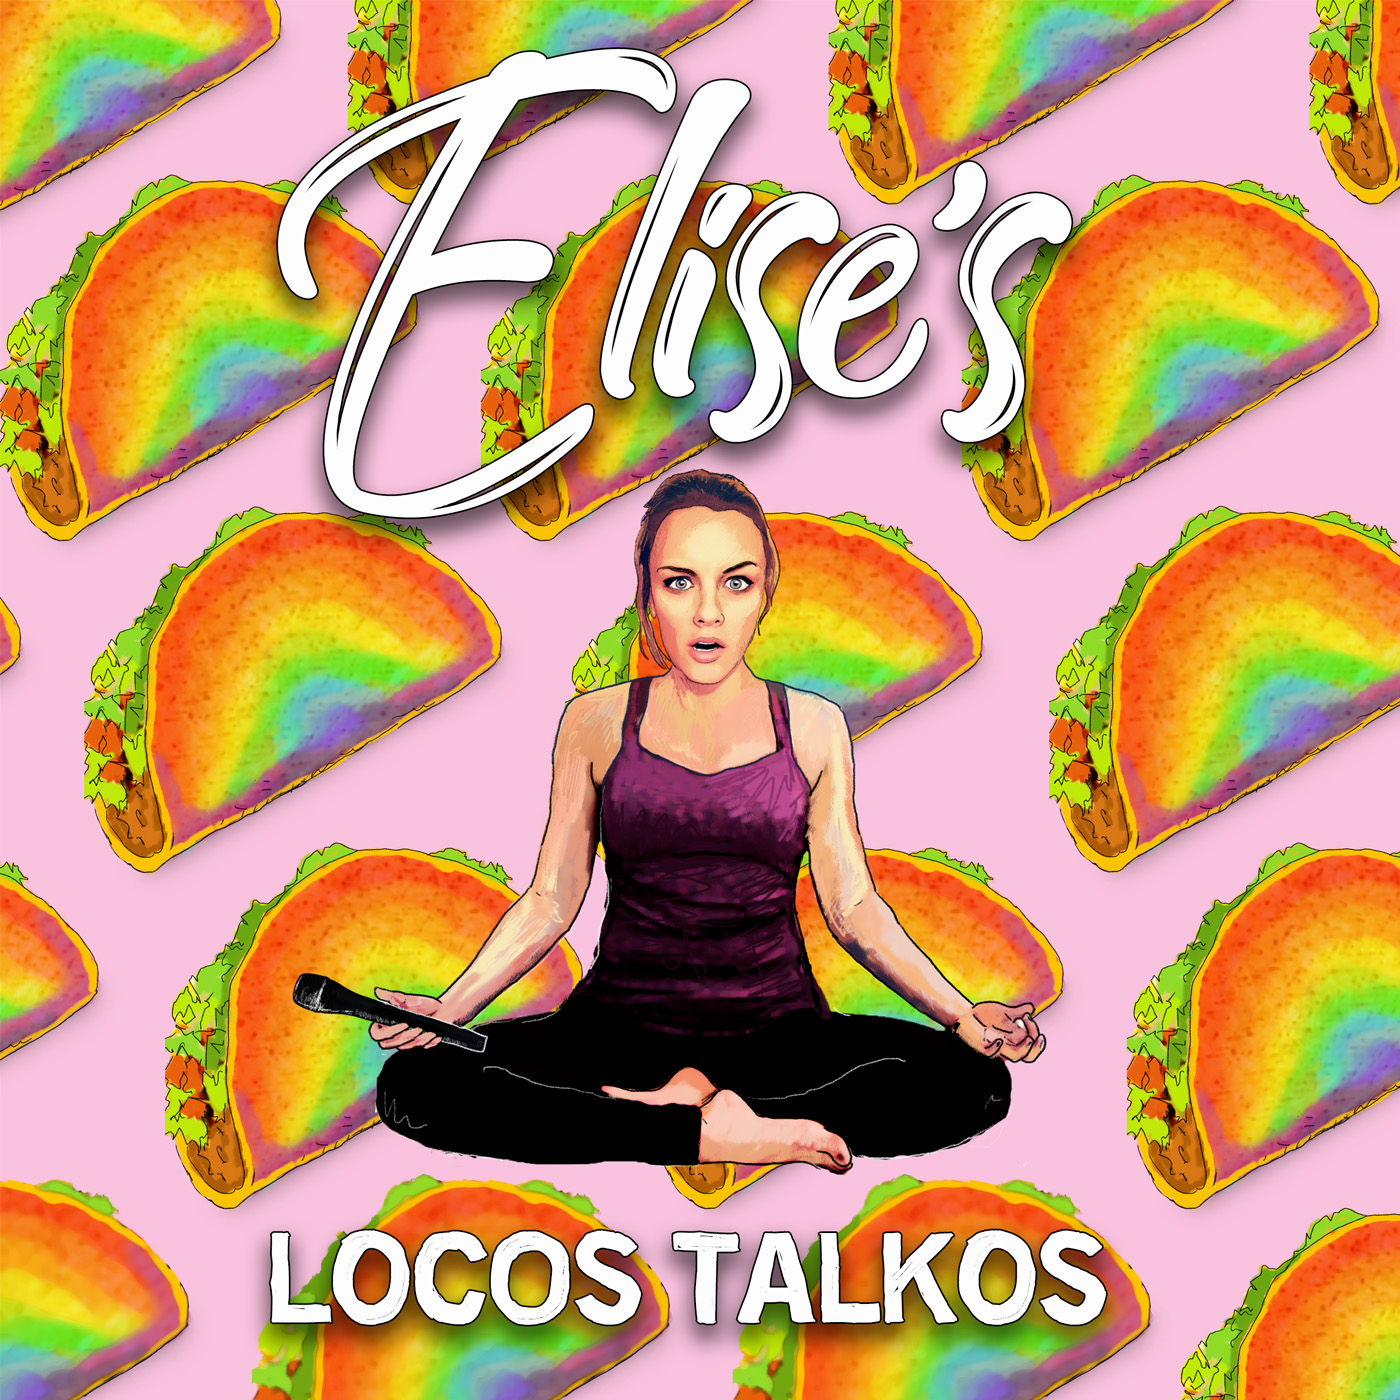 Elise's Locos Talkos